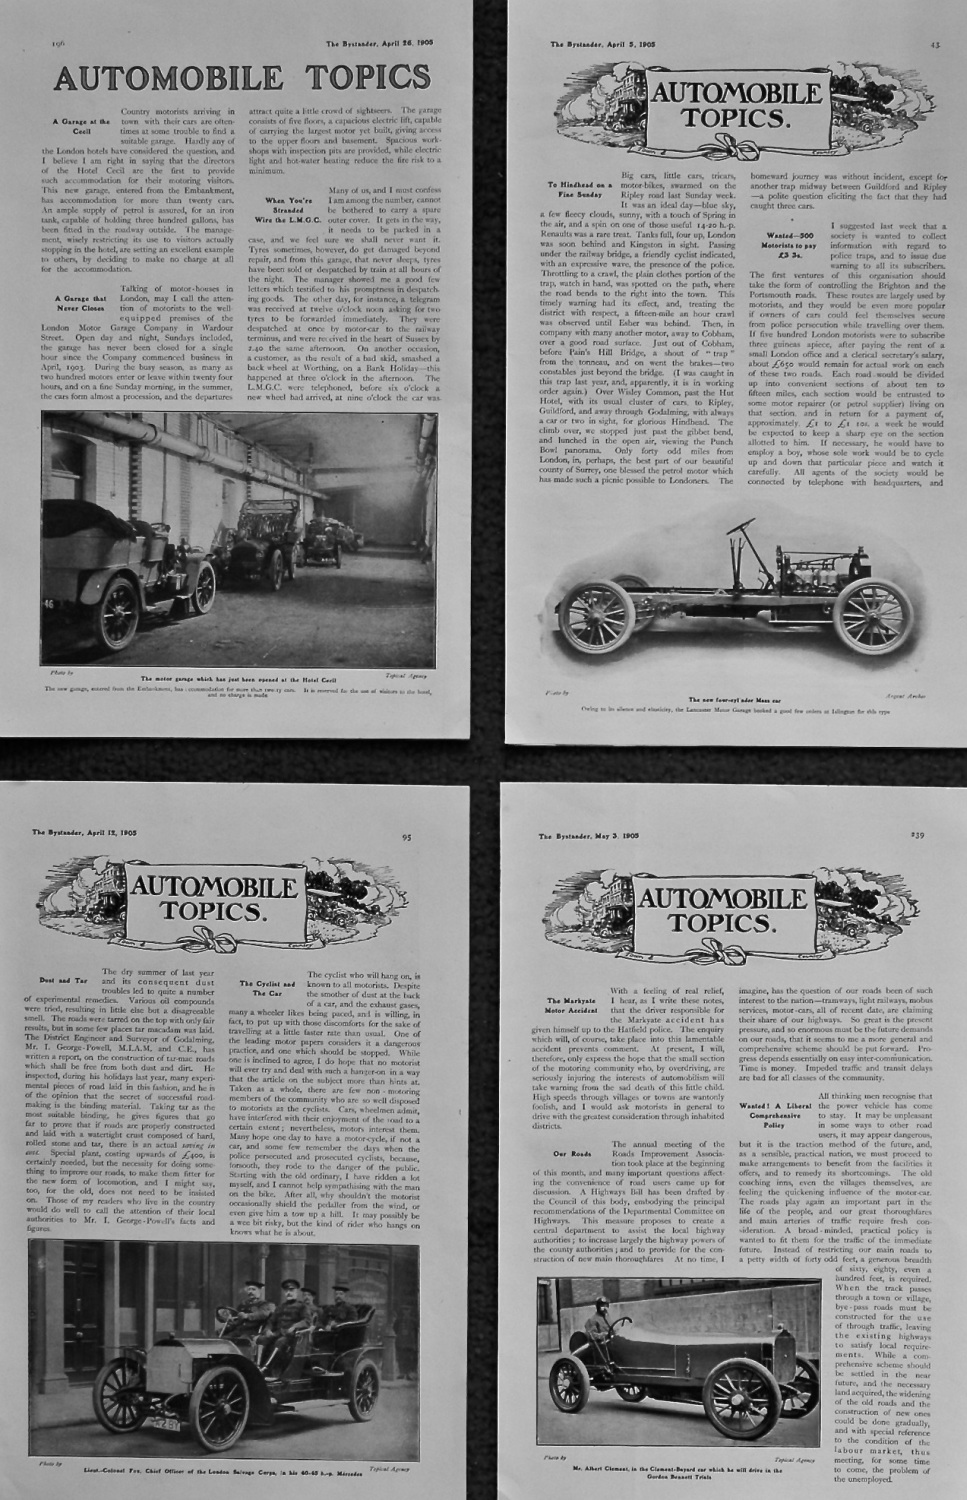 Automobile Topics. 1905.